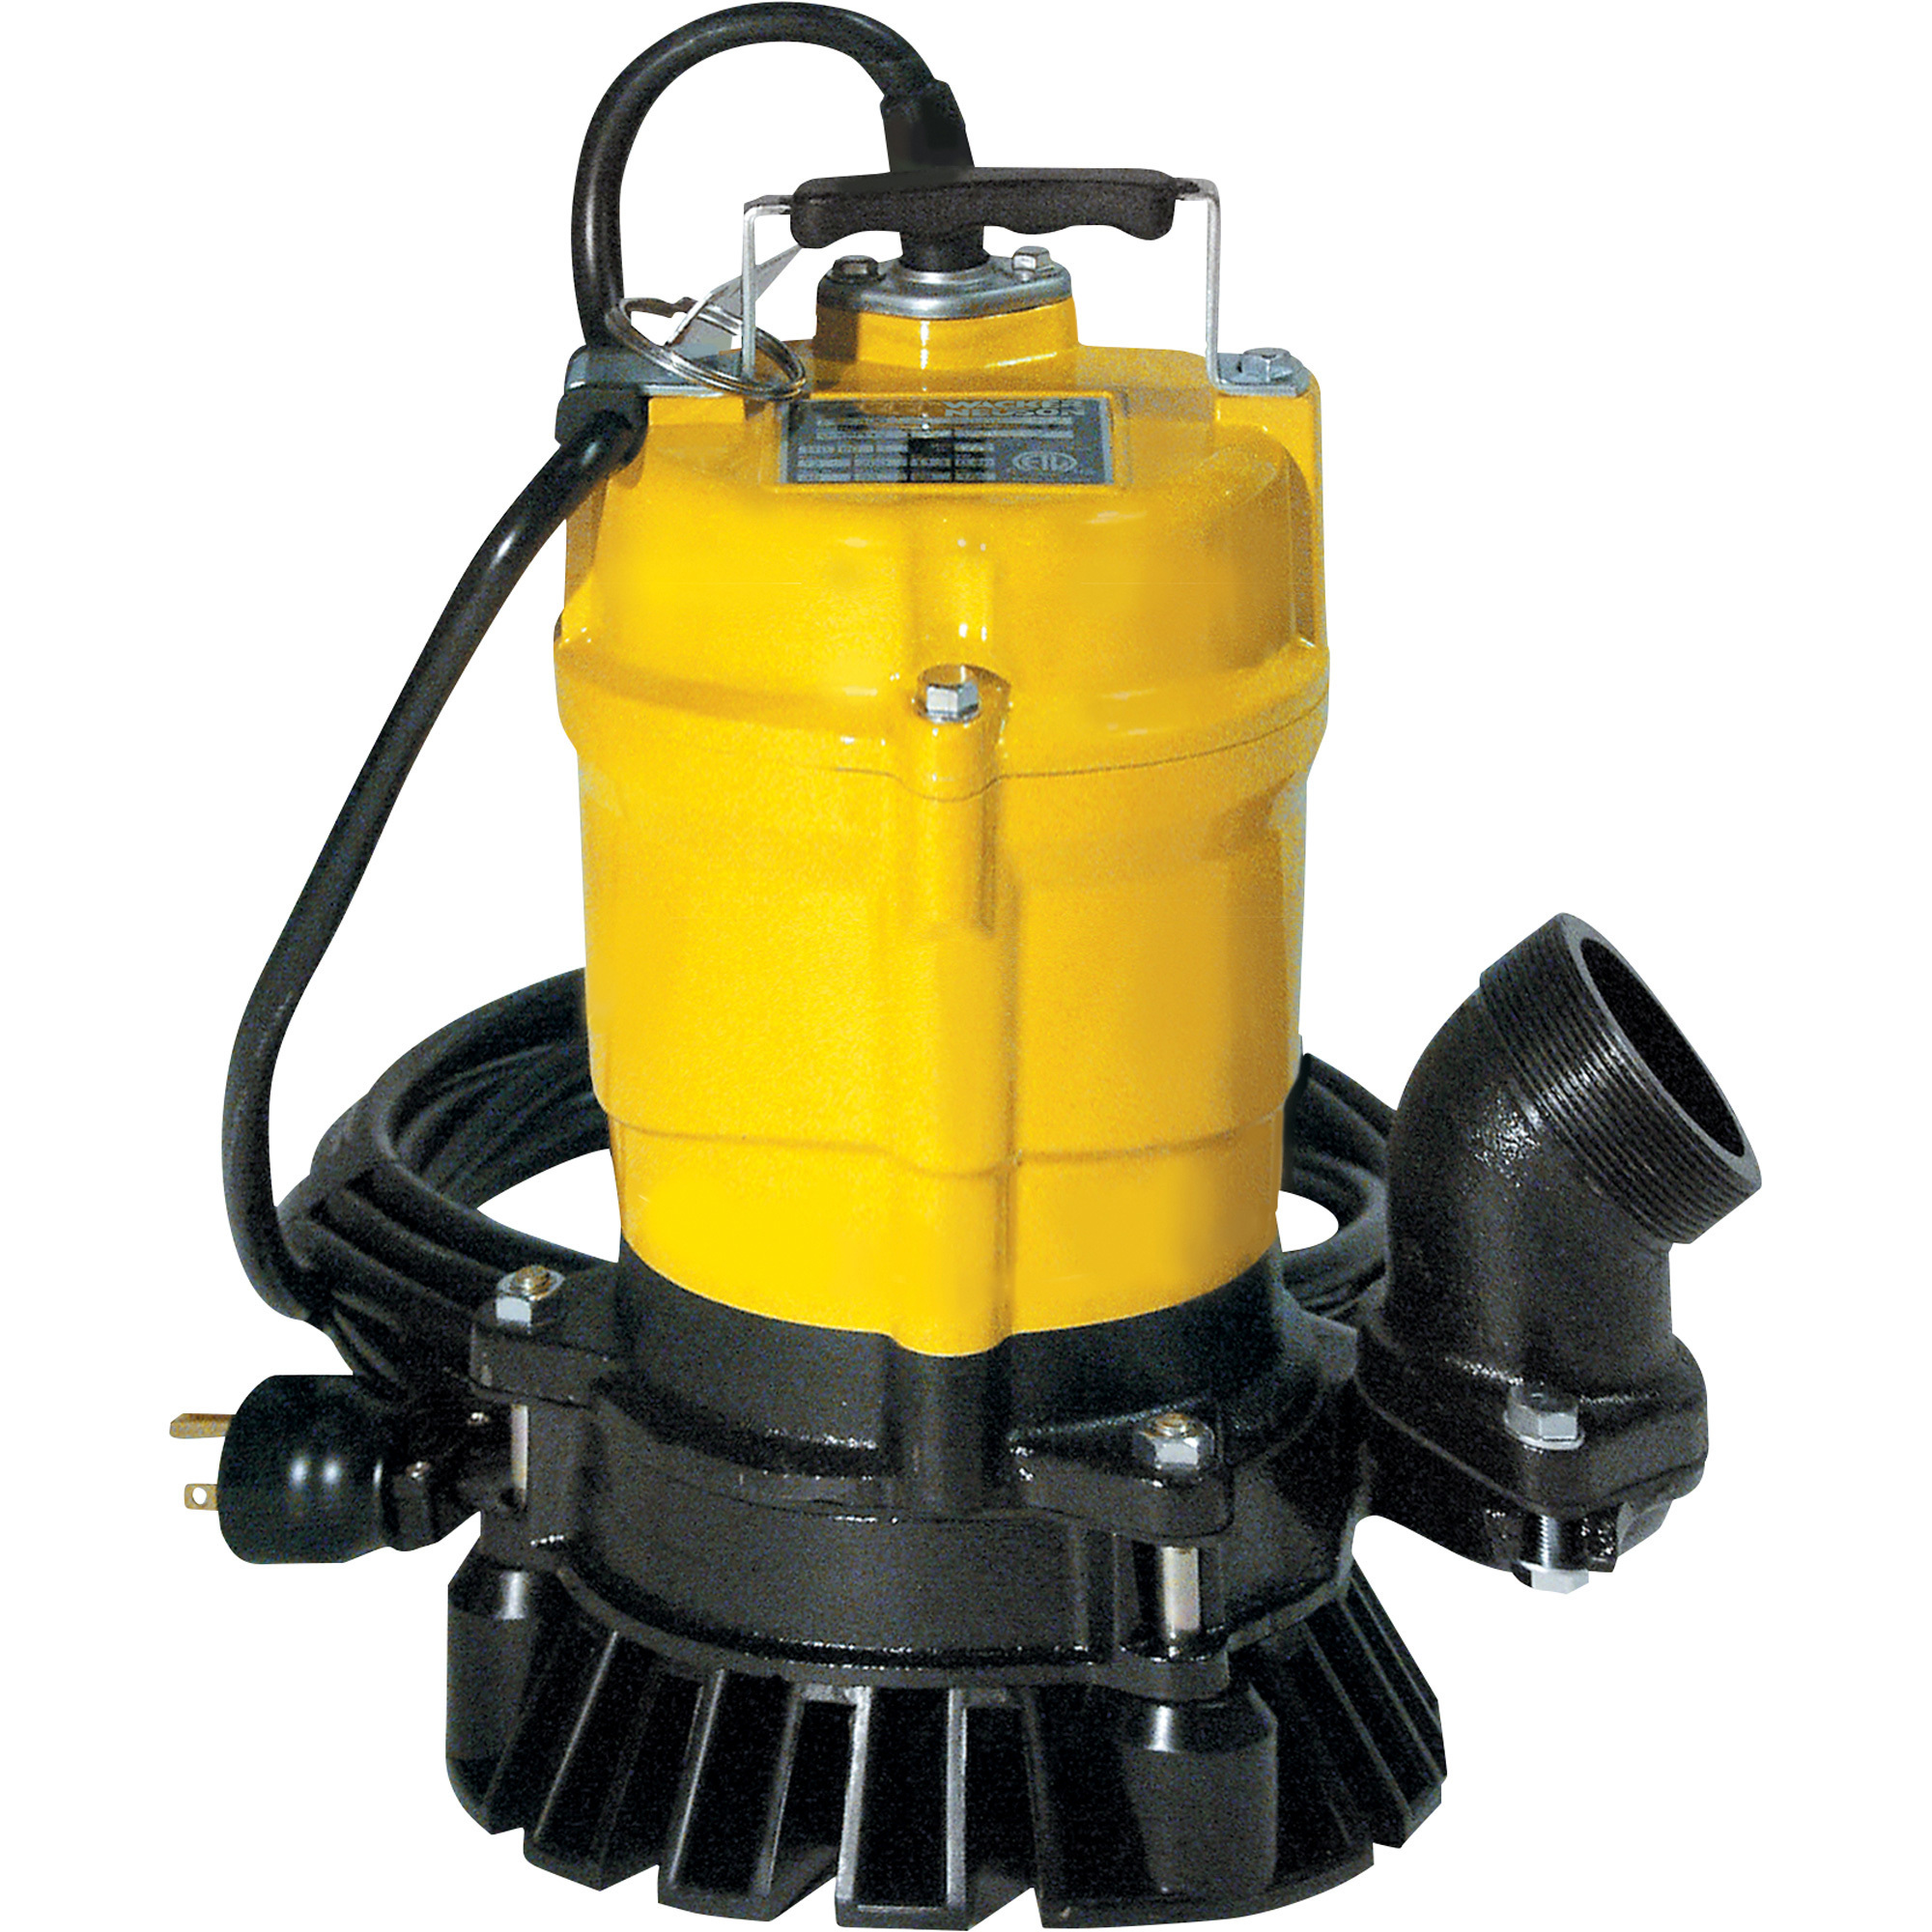 Wacker Neuson Submersible Utility Water Pump, 3180 GPH, 1/2 HP, Model PST2 400